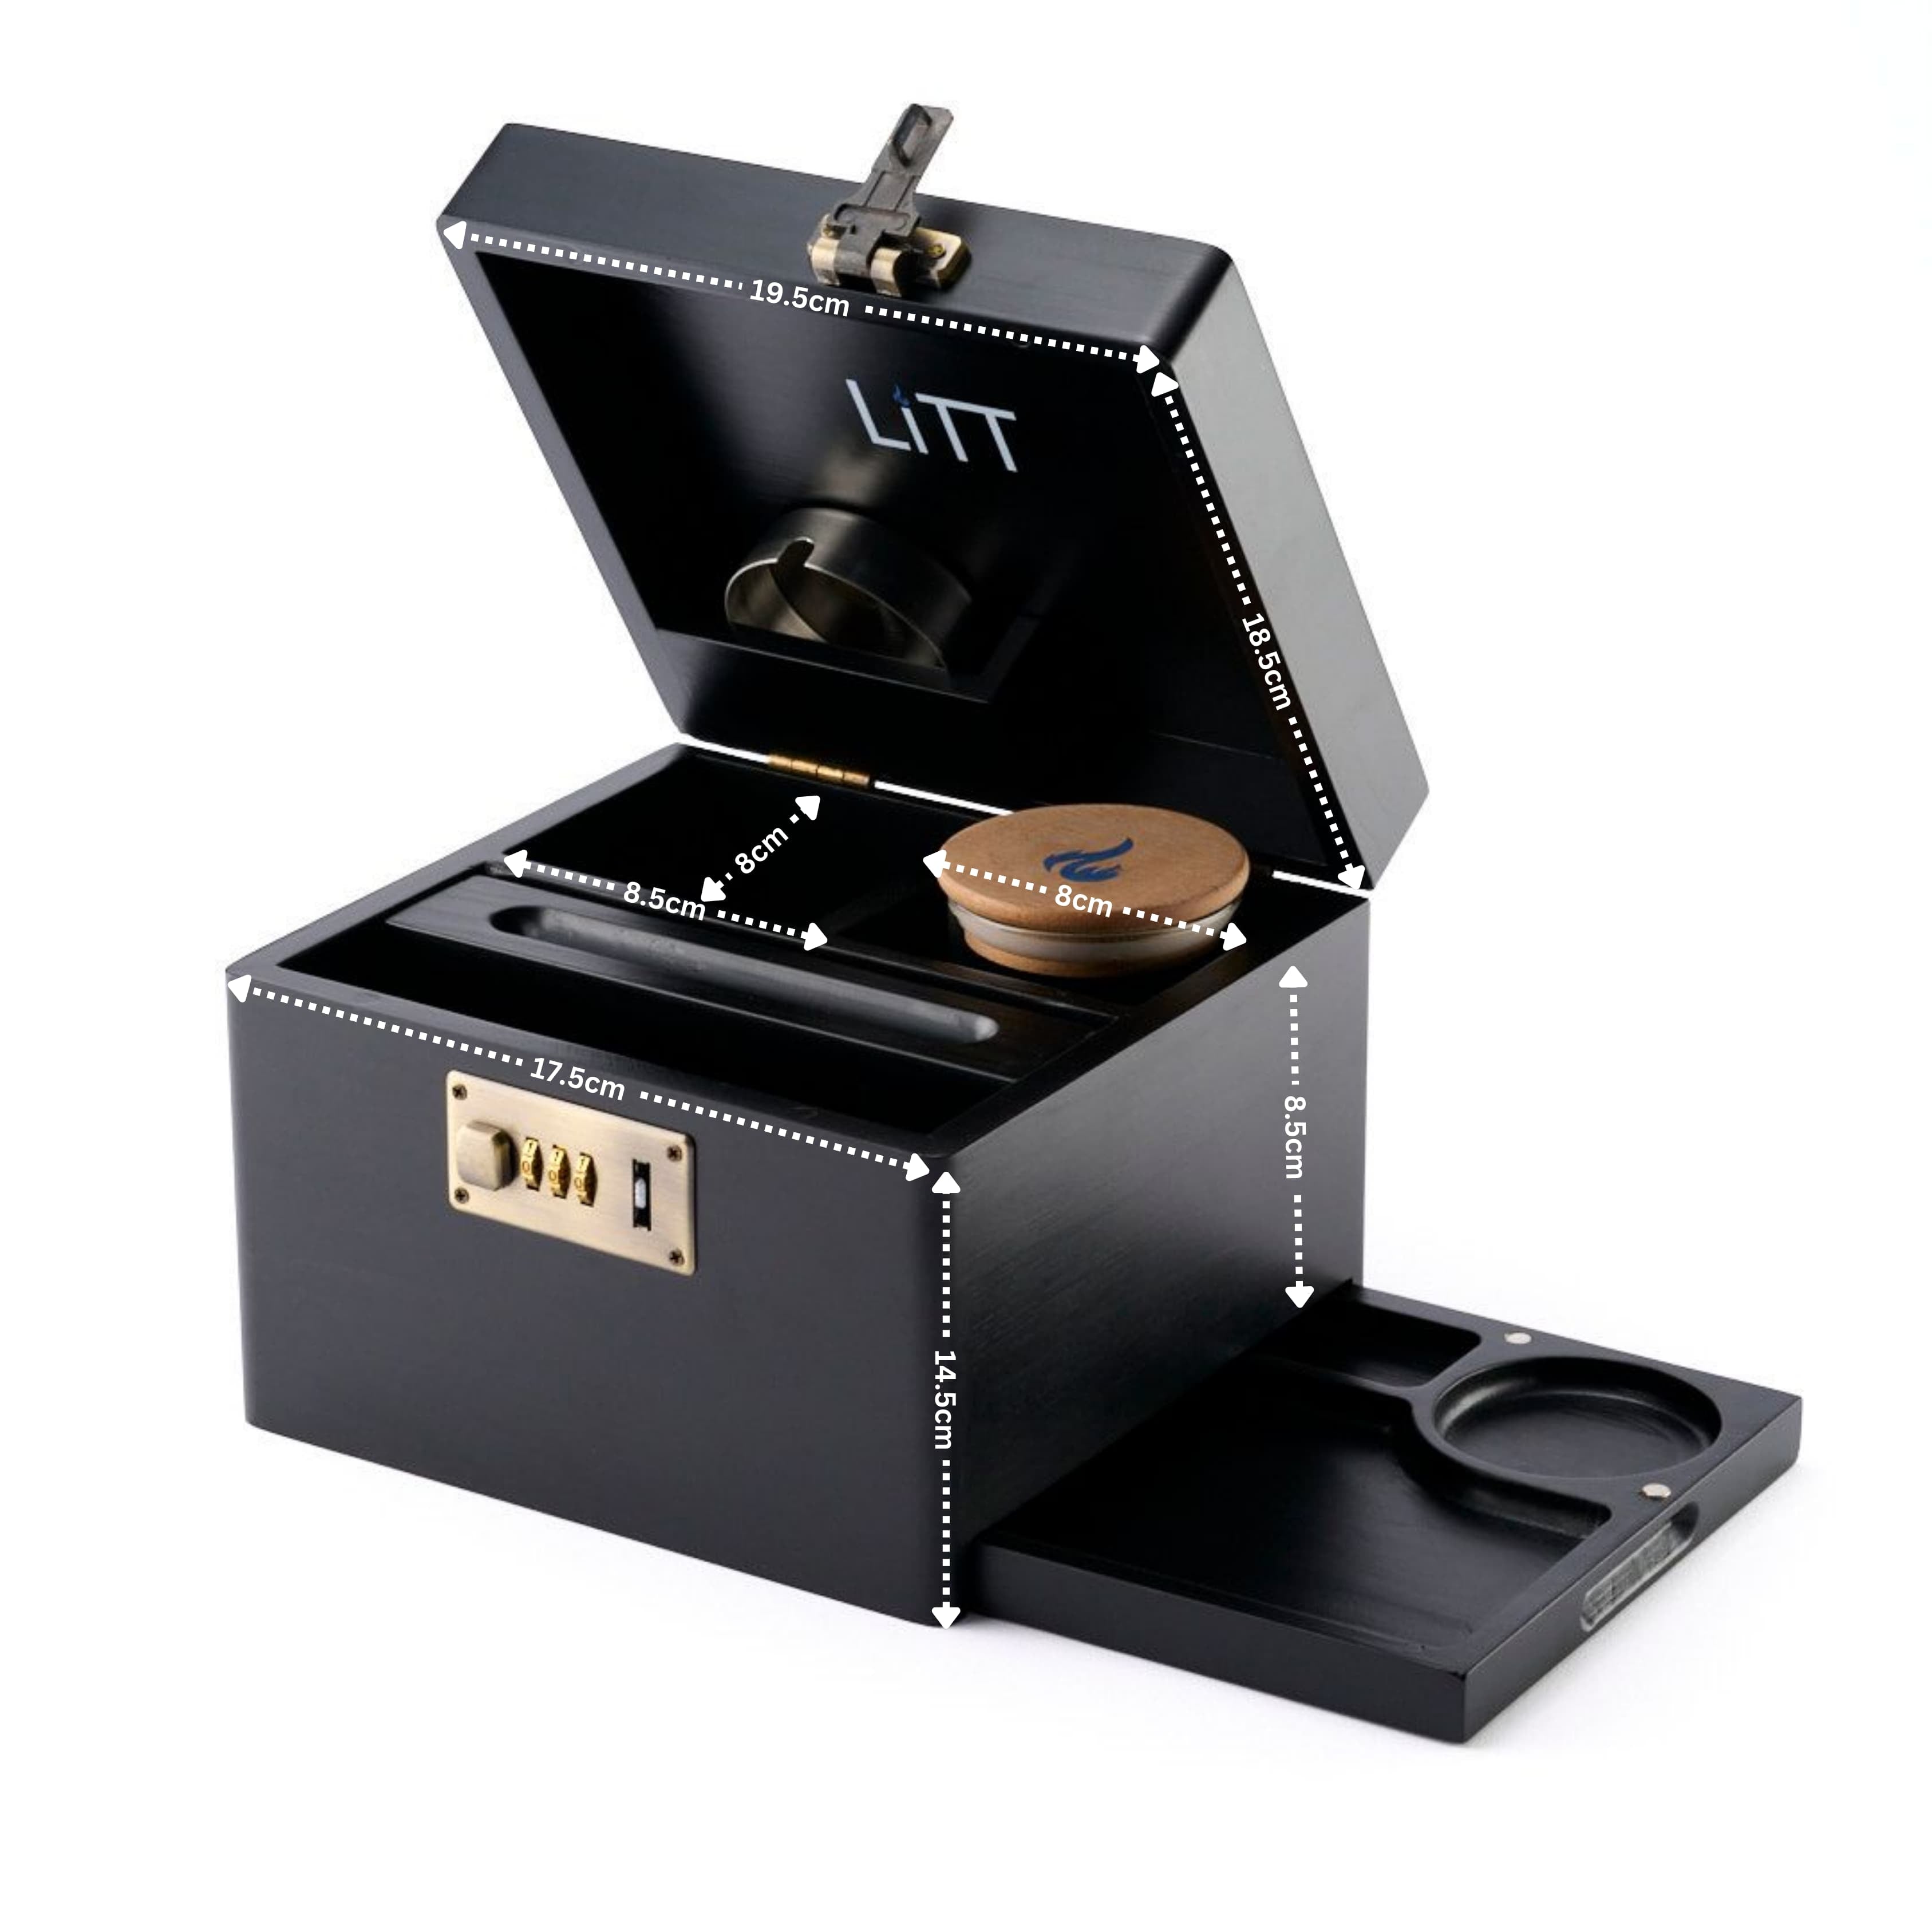 LITT - Stash Box Set with Glass Jar, Hidden Tray, and Storage Box (Black)